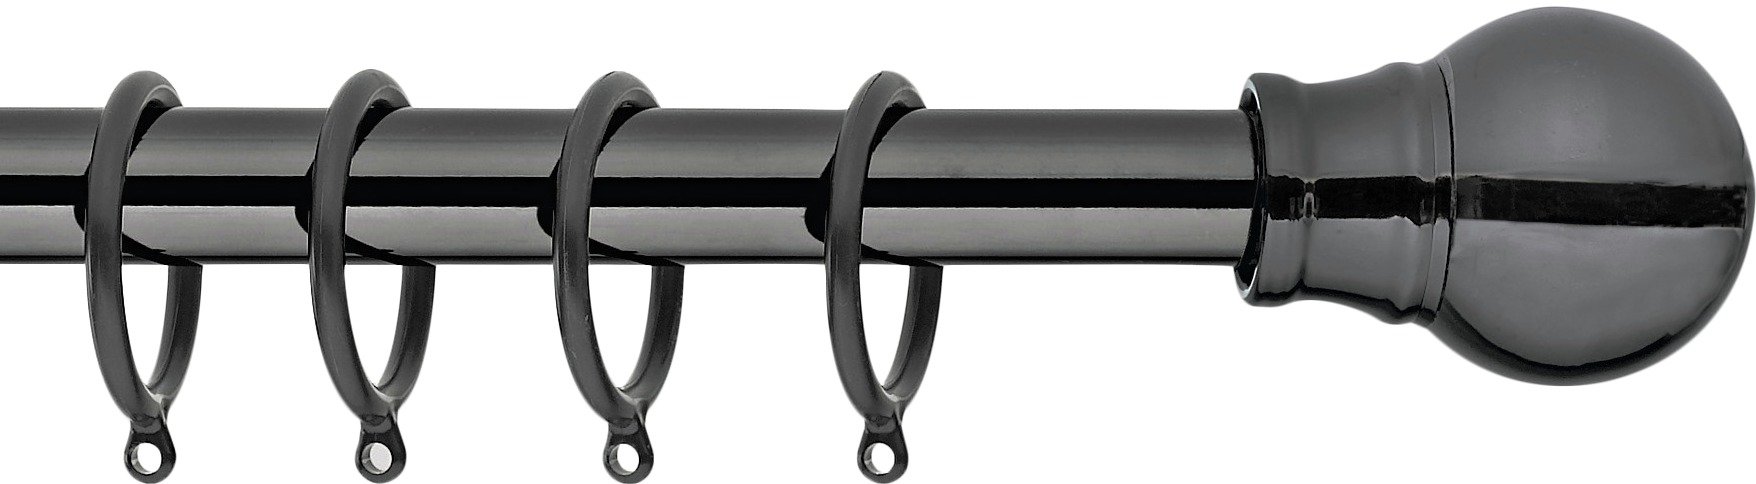 Argos Home Extendable Metal Ball Curtain Pole - Black Nickel